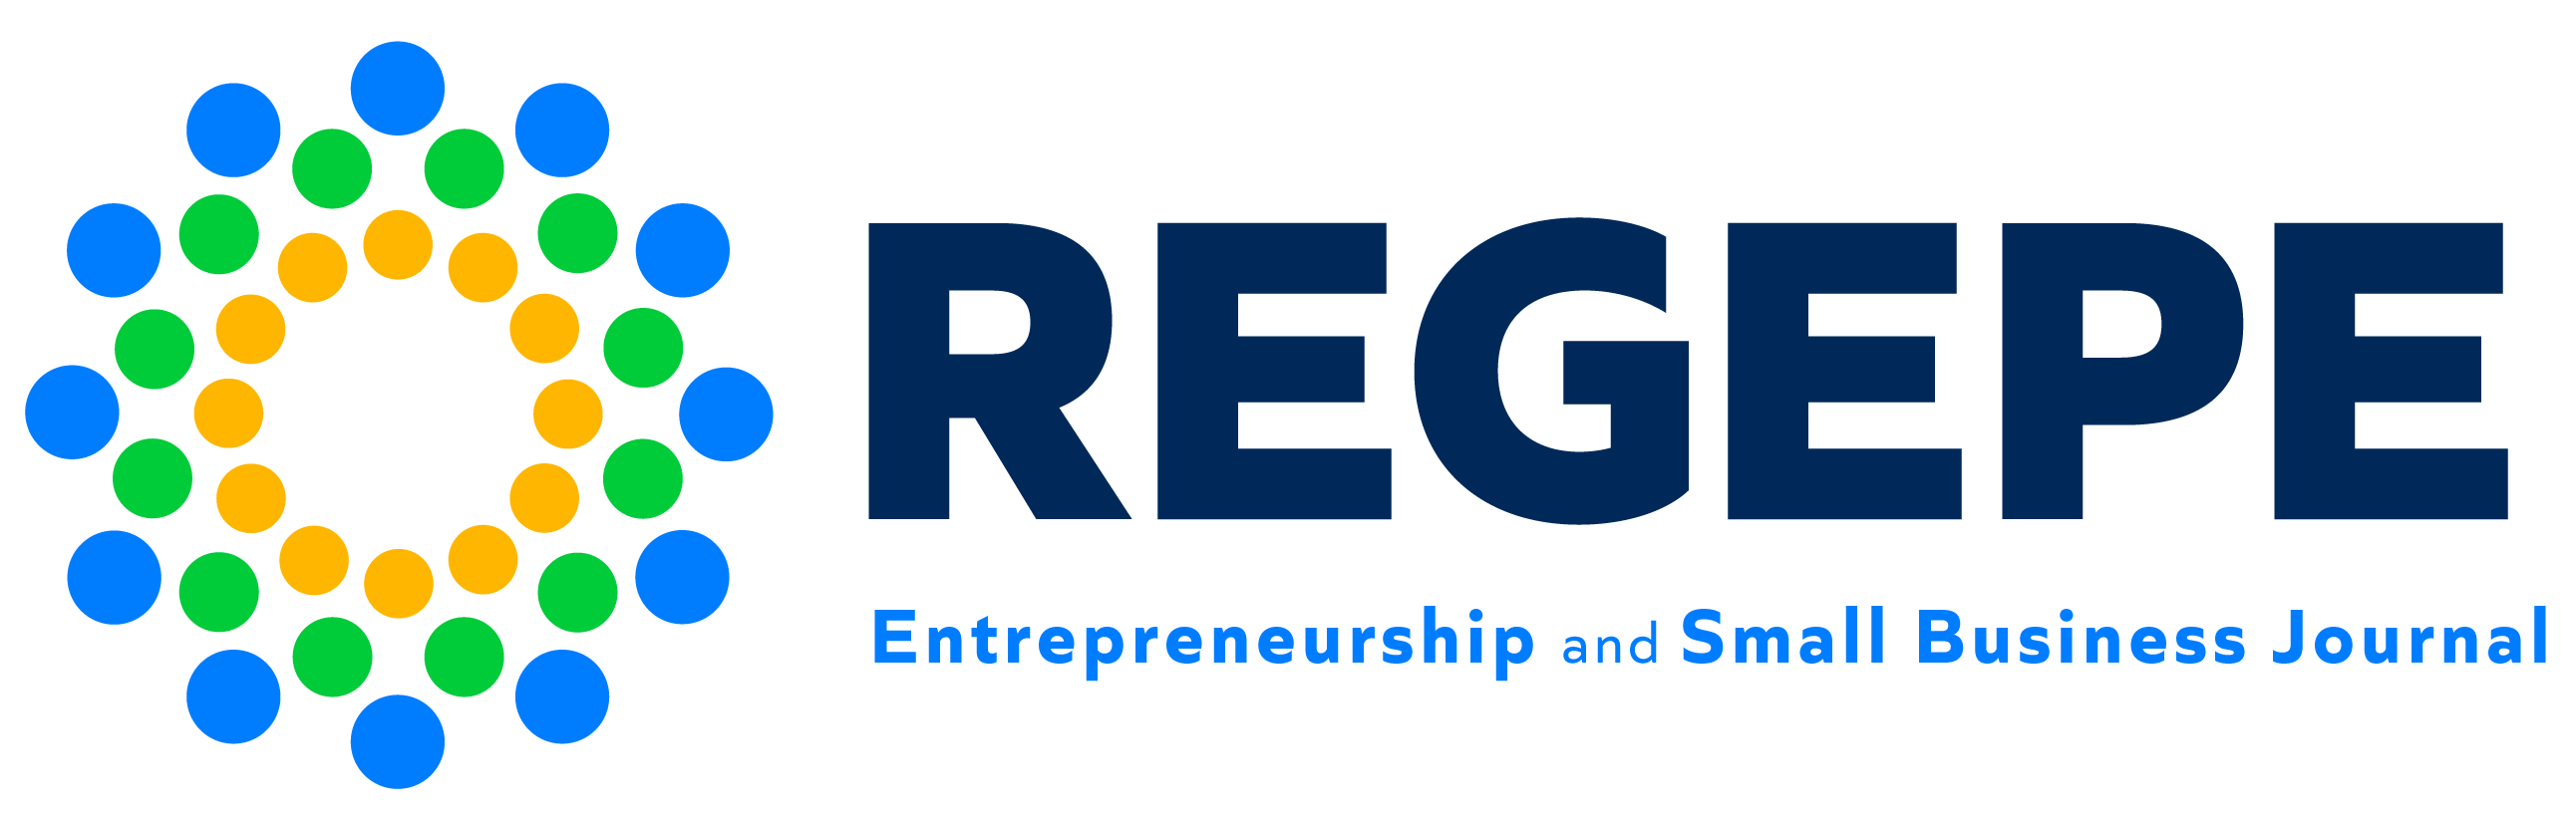 Logomarca do periódico: REGEPE Entrepreneurship and Small Business Journal